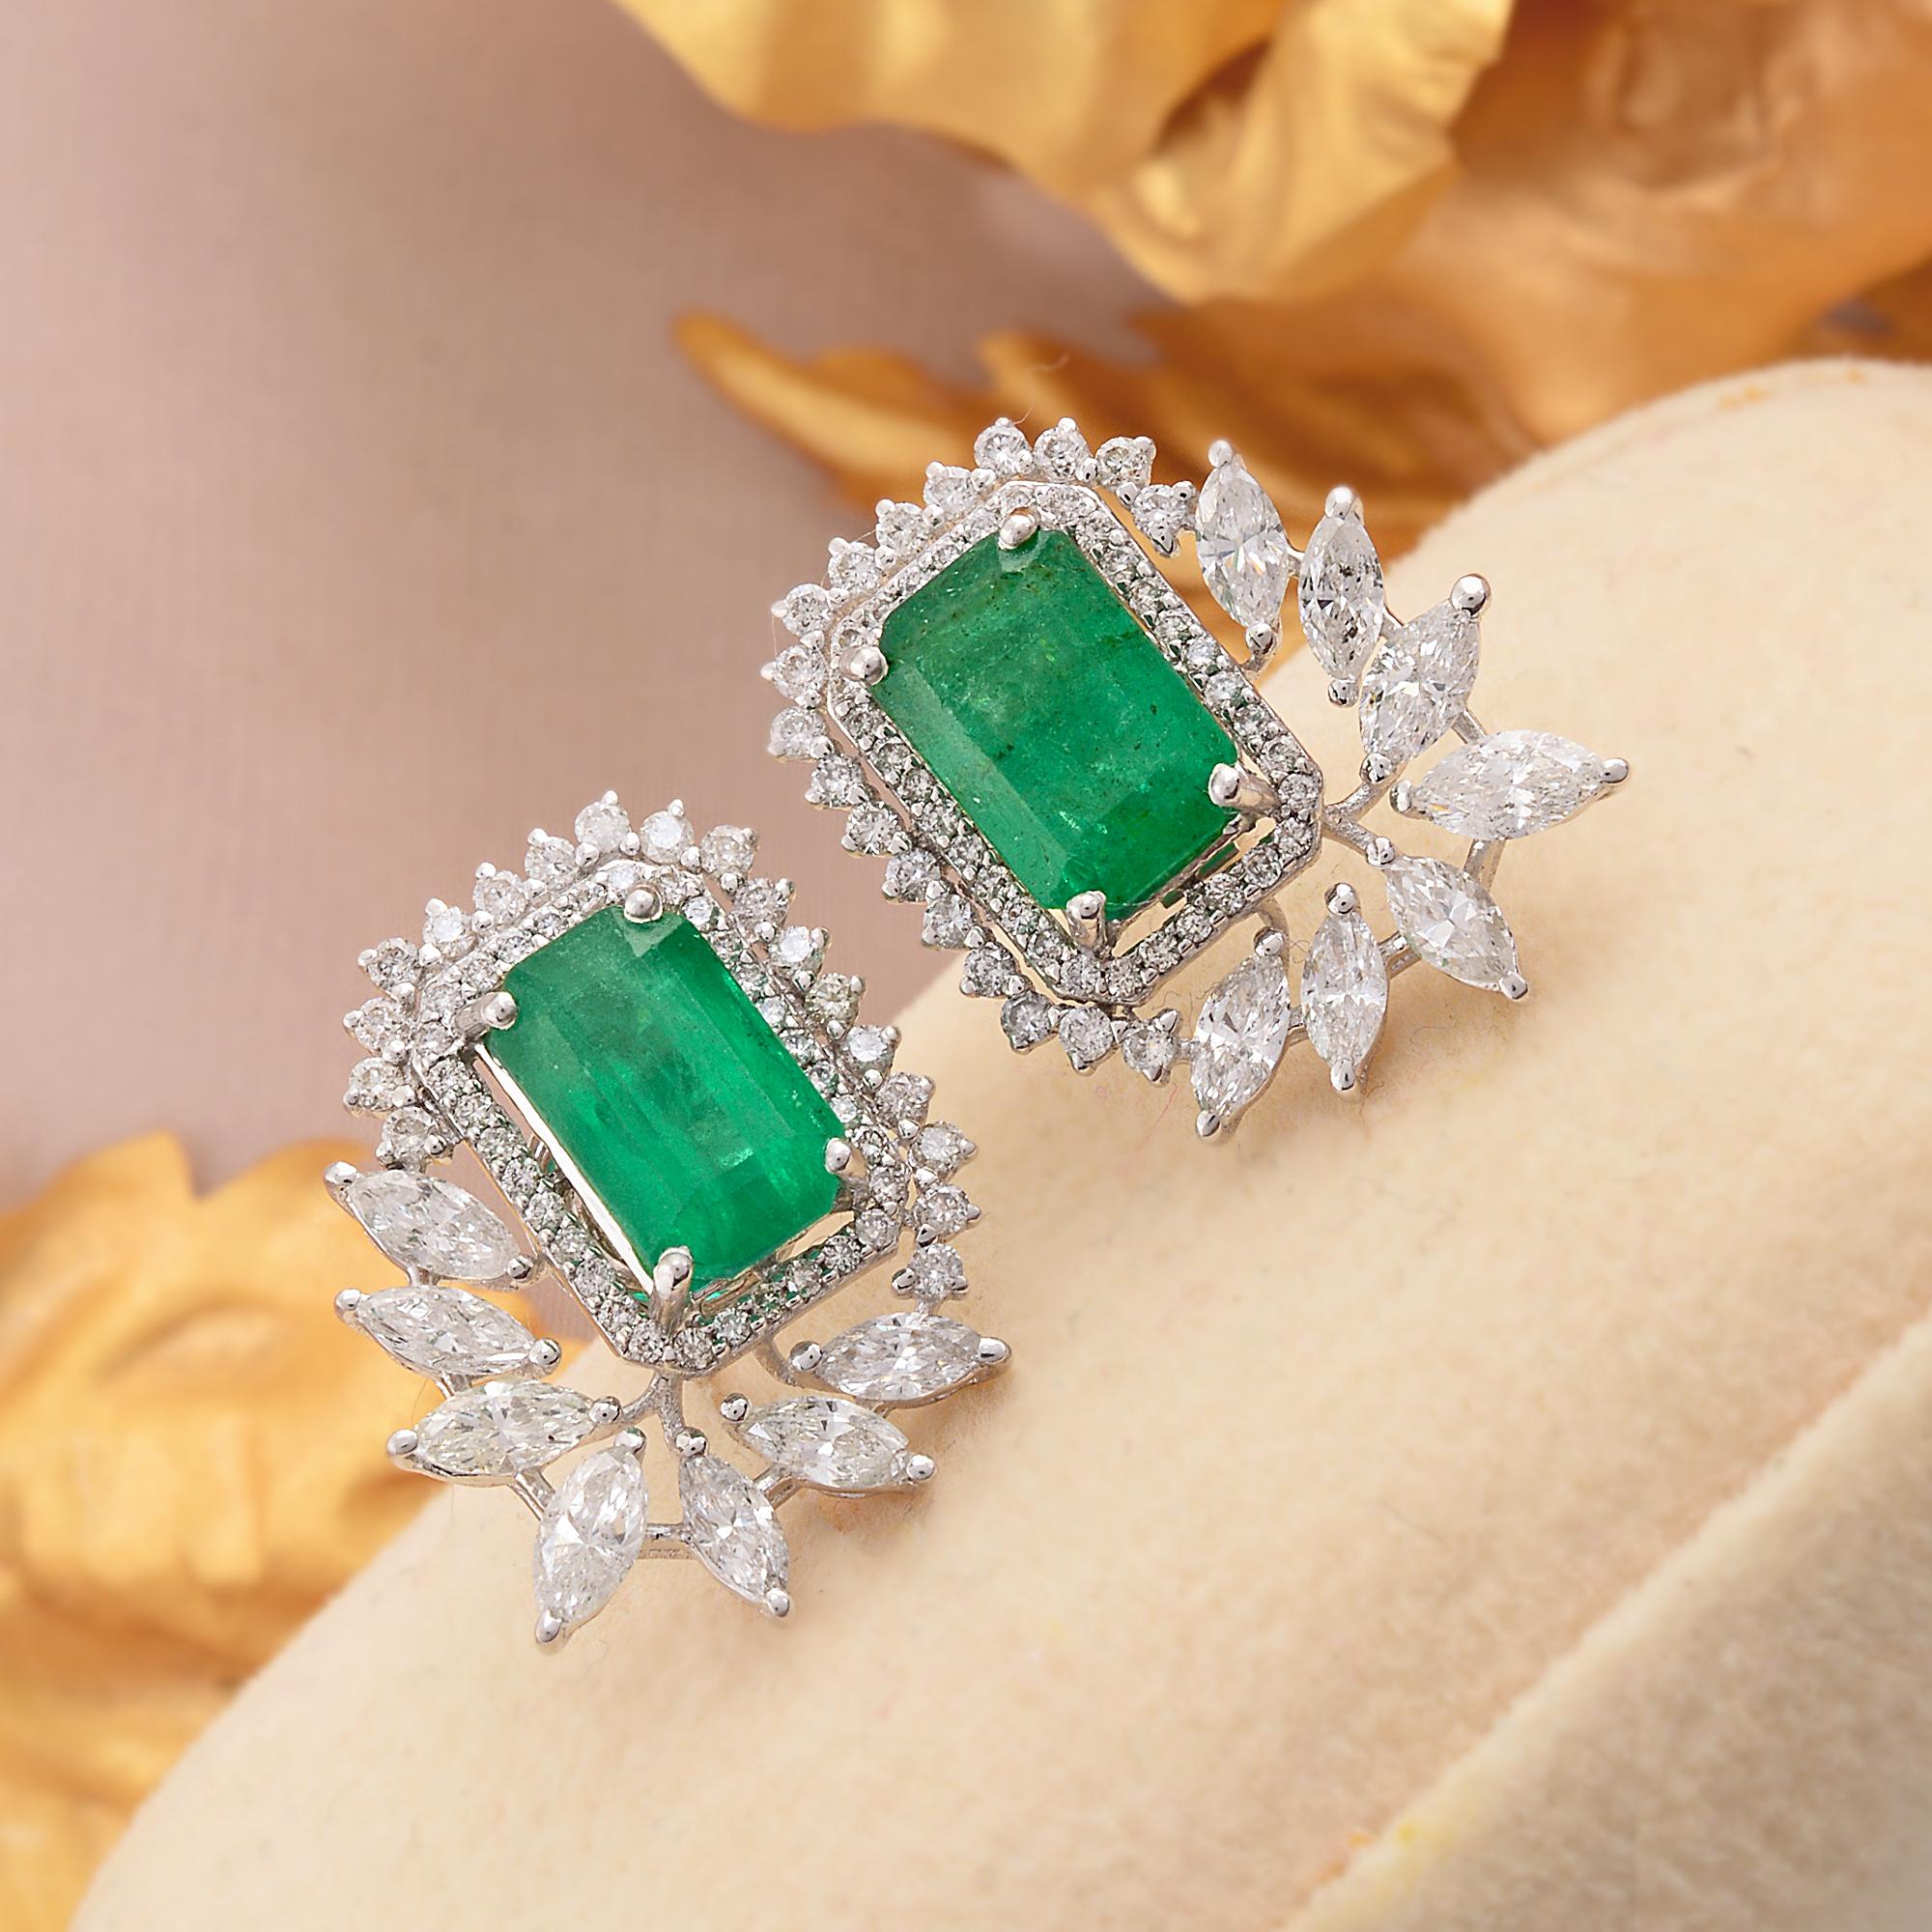 Emerald Cut Zambian Emerald Gemstone Earrings Diamond 14 Karat White Gold Handmade Jewelry For Sale